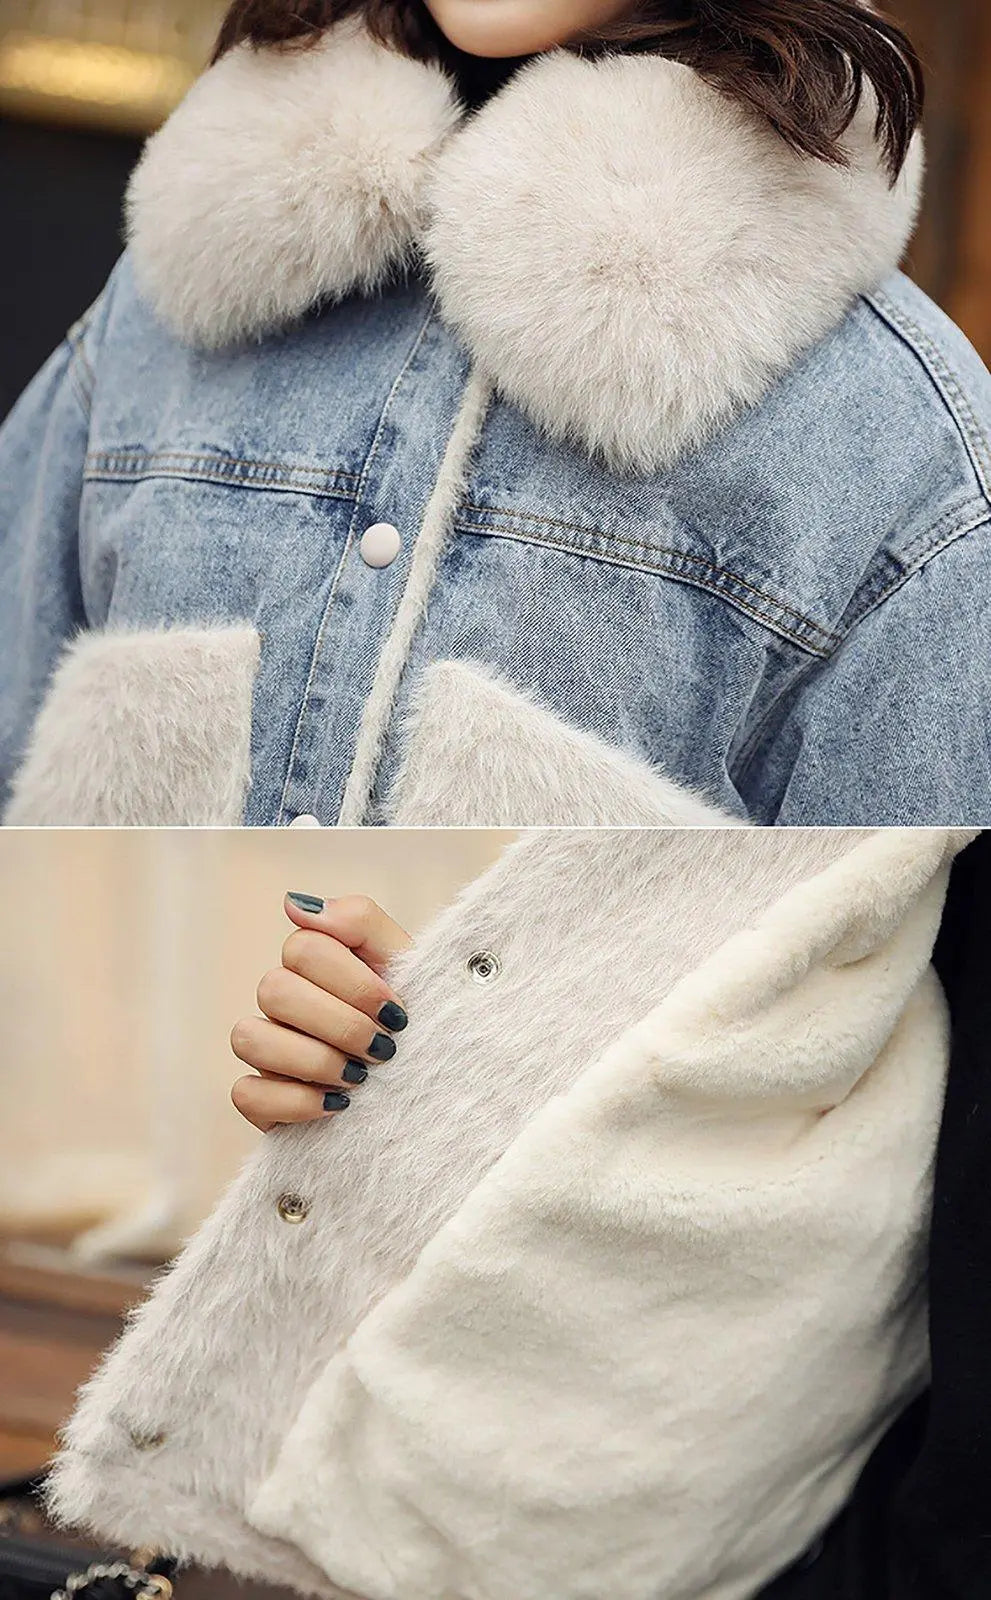 Women Fur Denim Jacket with Fur Parka Winter Warm Down Coat Outerwear 33503  | eBay